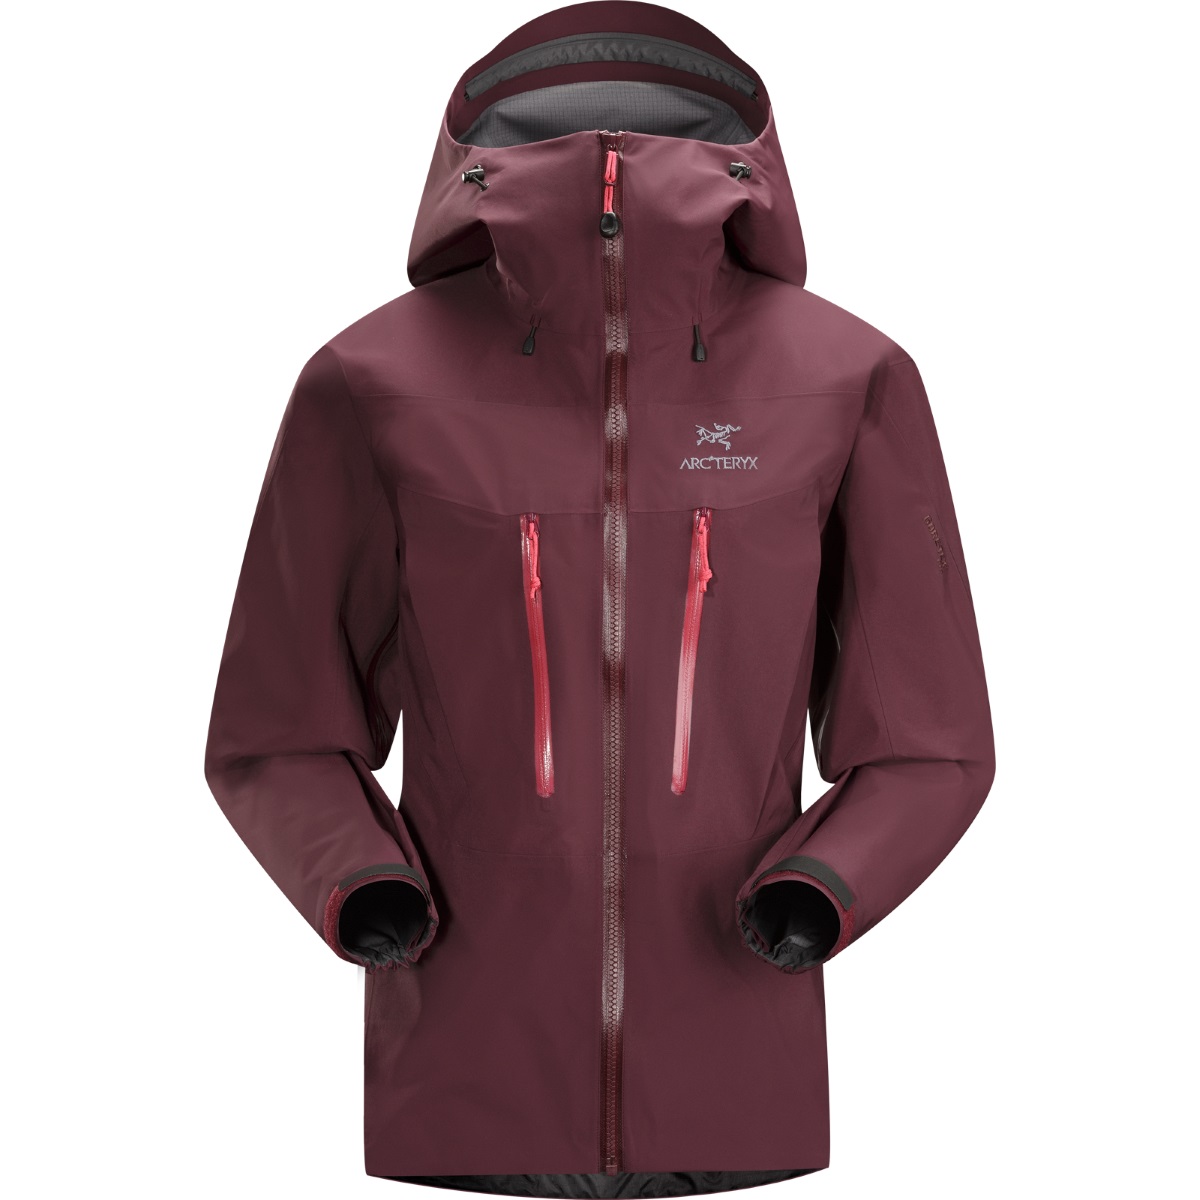 Arc'teryx Alpha SV Jacket, women's, discontinued Spring 2015 colors ...